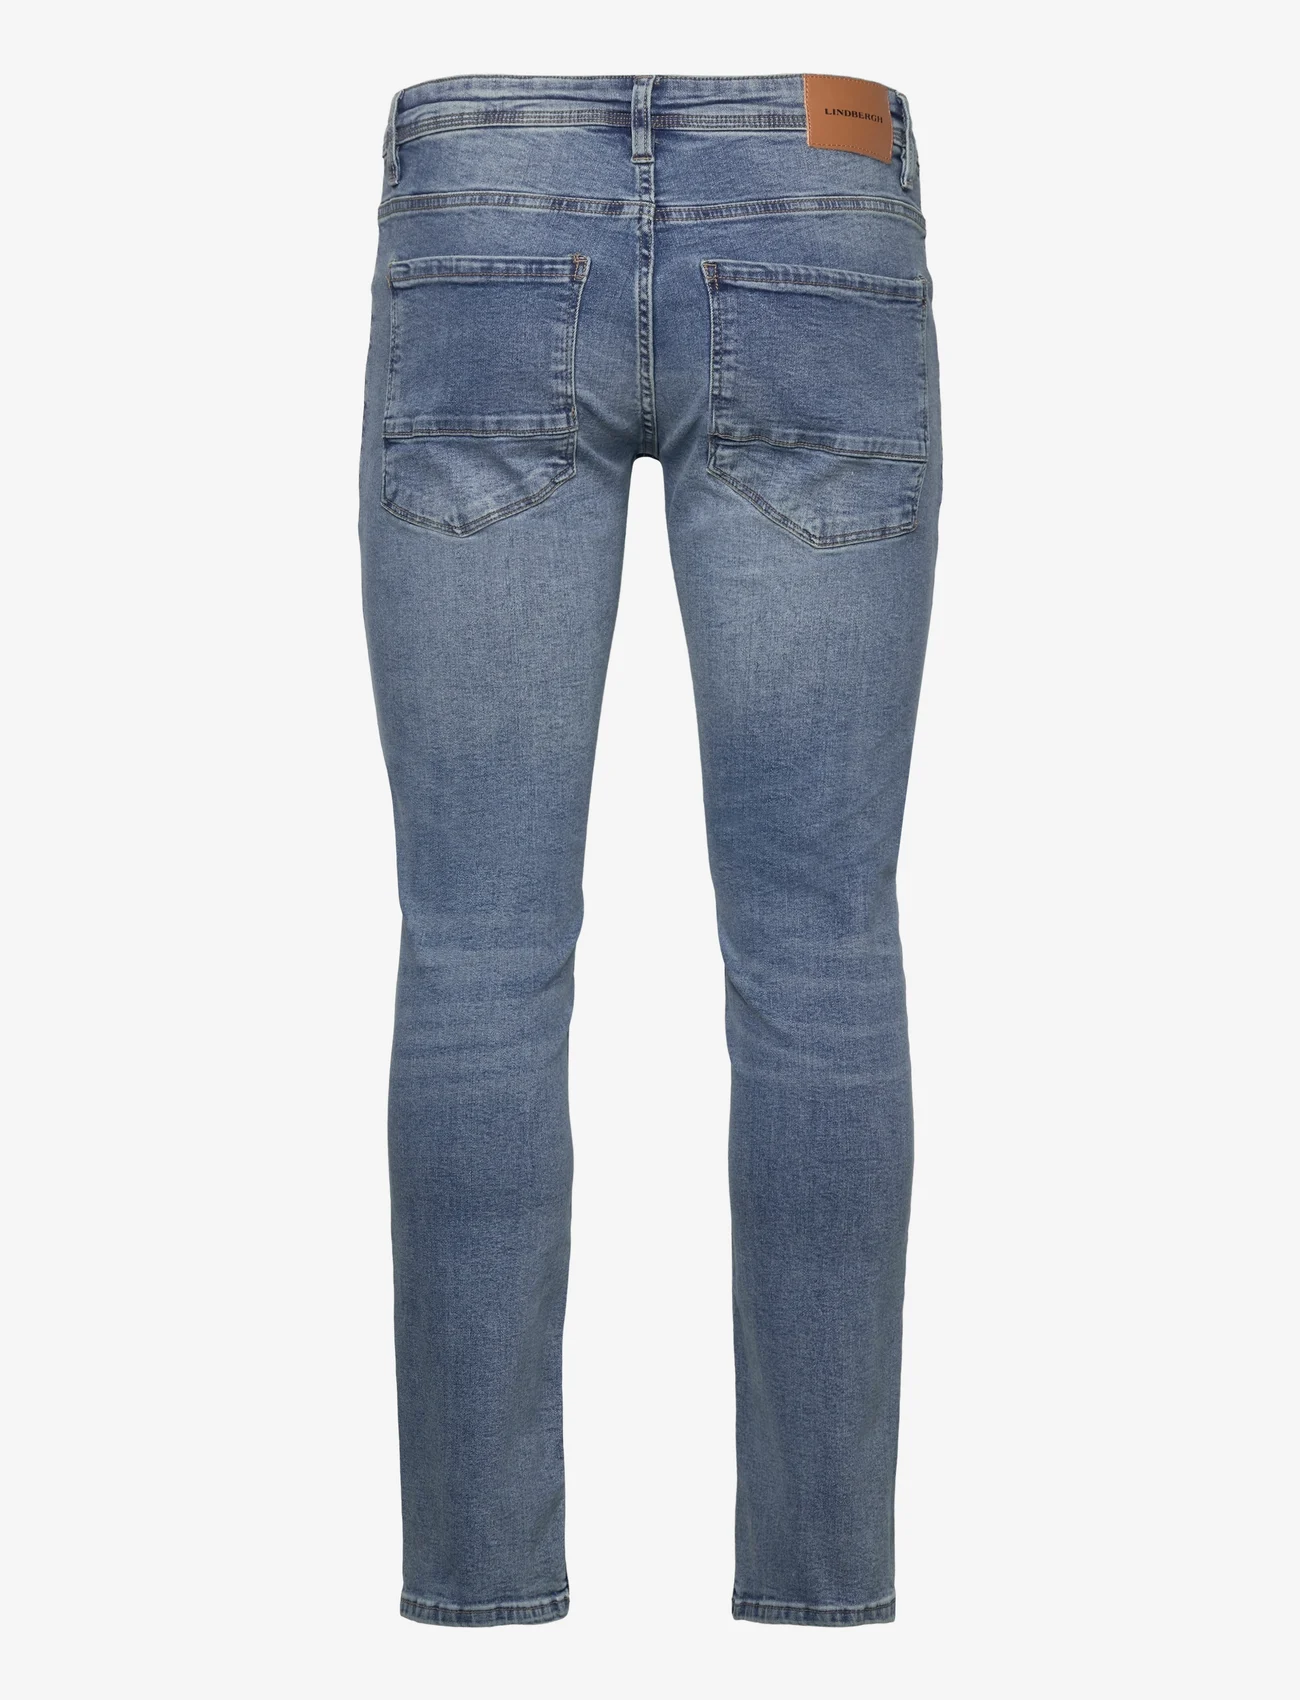 Lindbergh - Tapered Fit Superflex Jeans - slim fit jeans - medium blue - 1